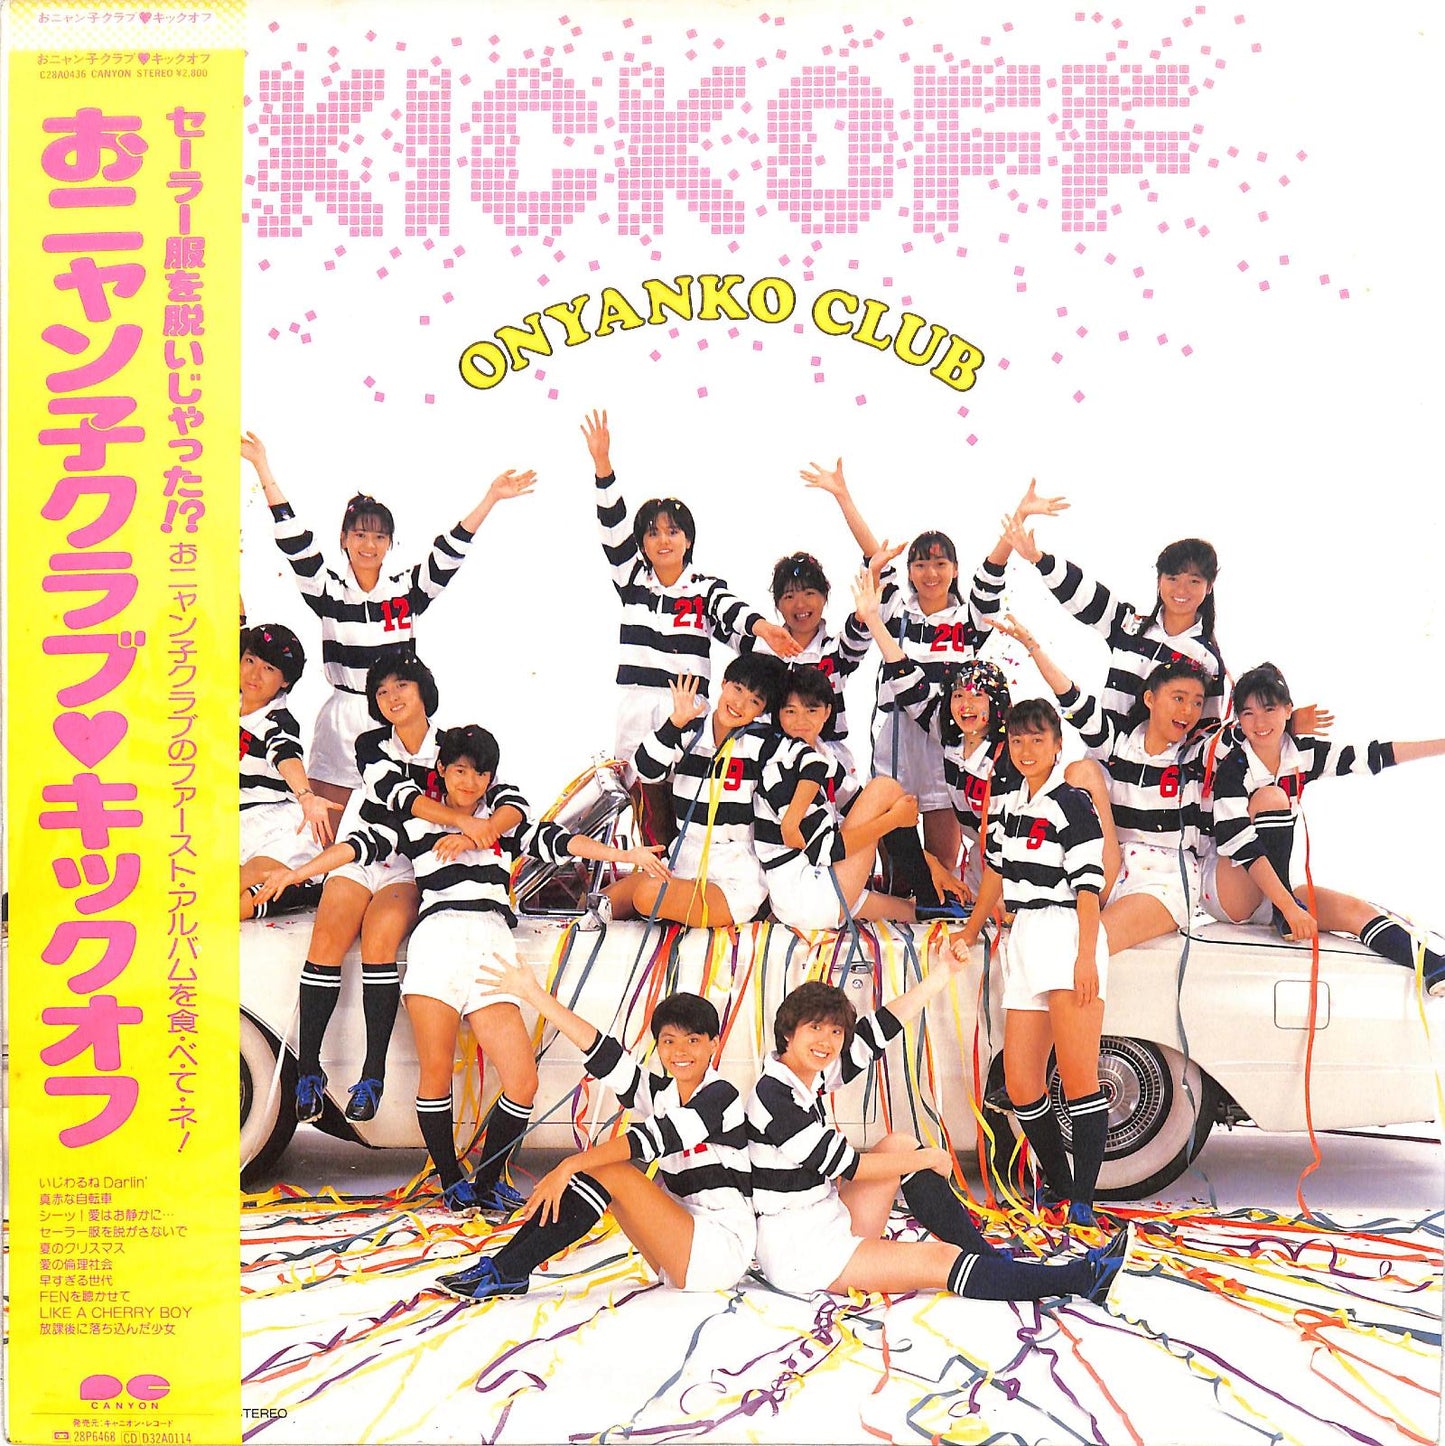 ONYANKO CLUB - Kick Off